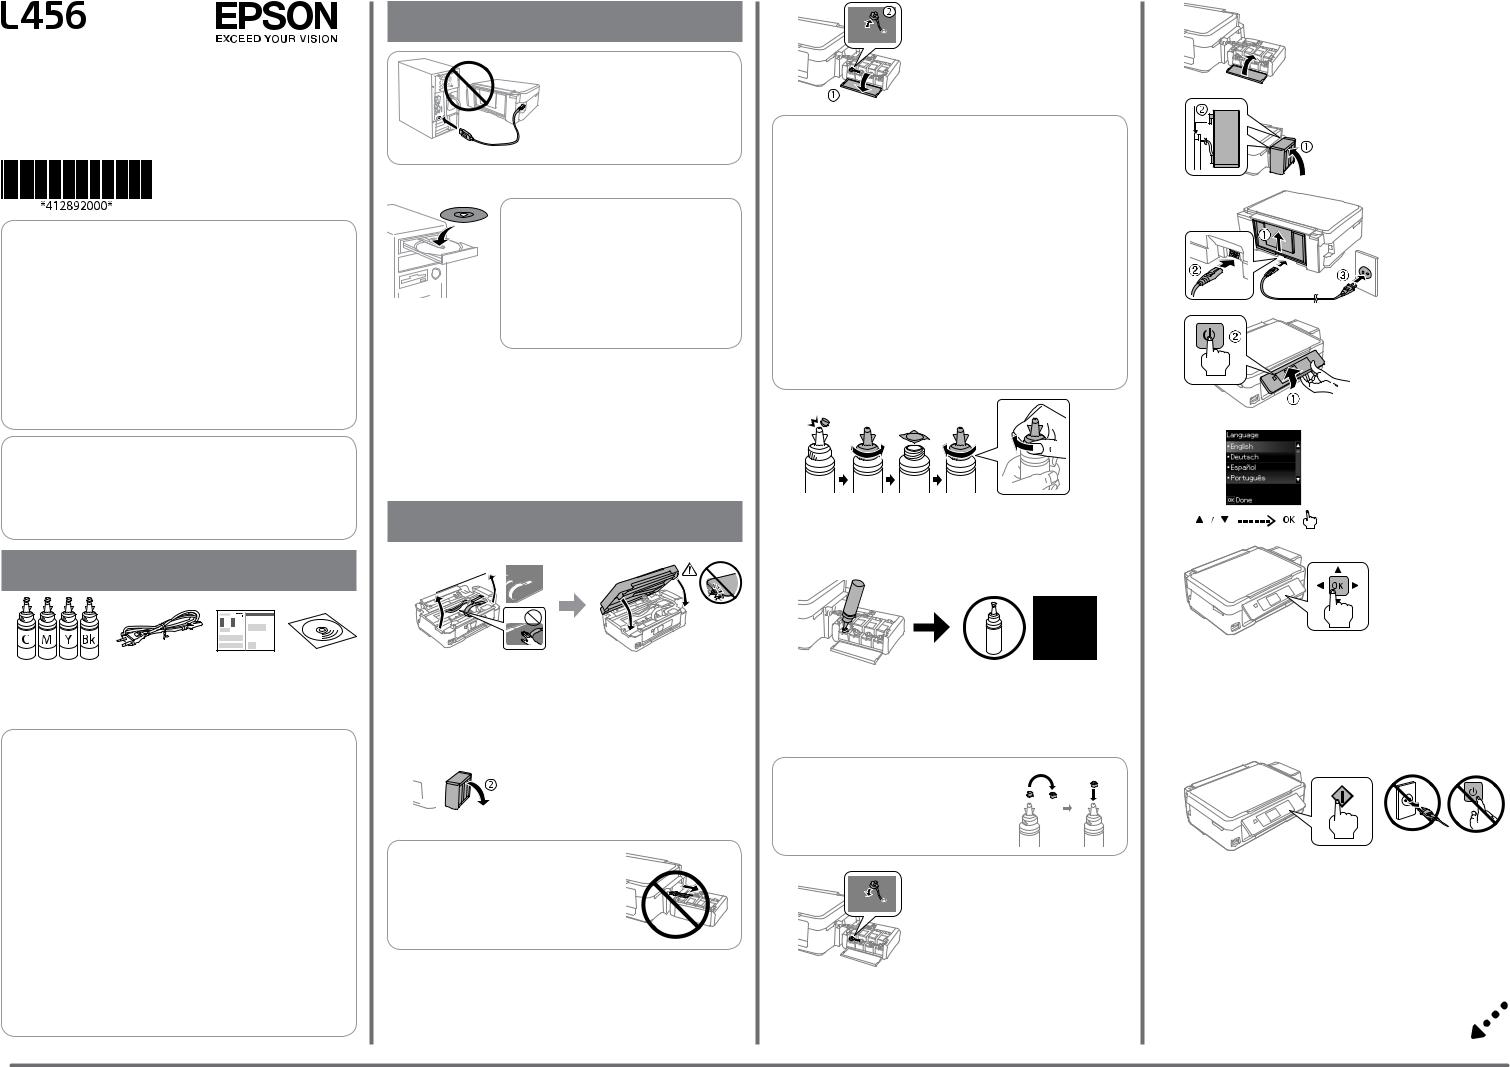 Epson L456 User Manual